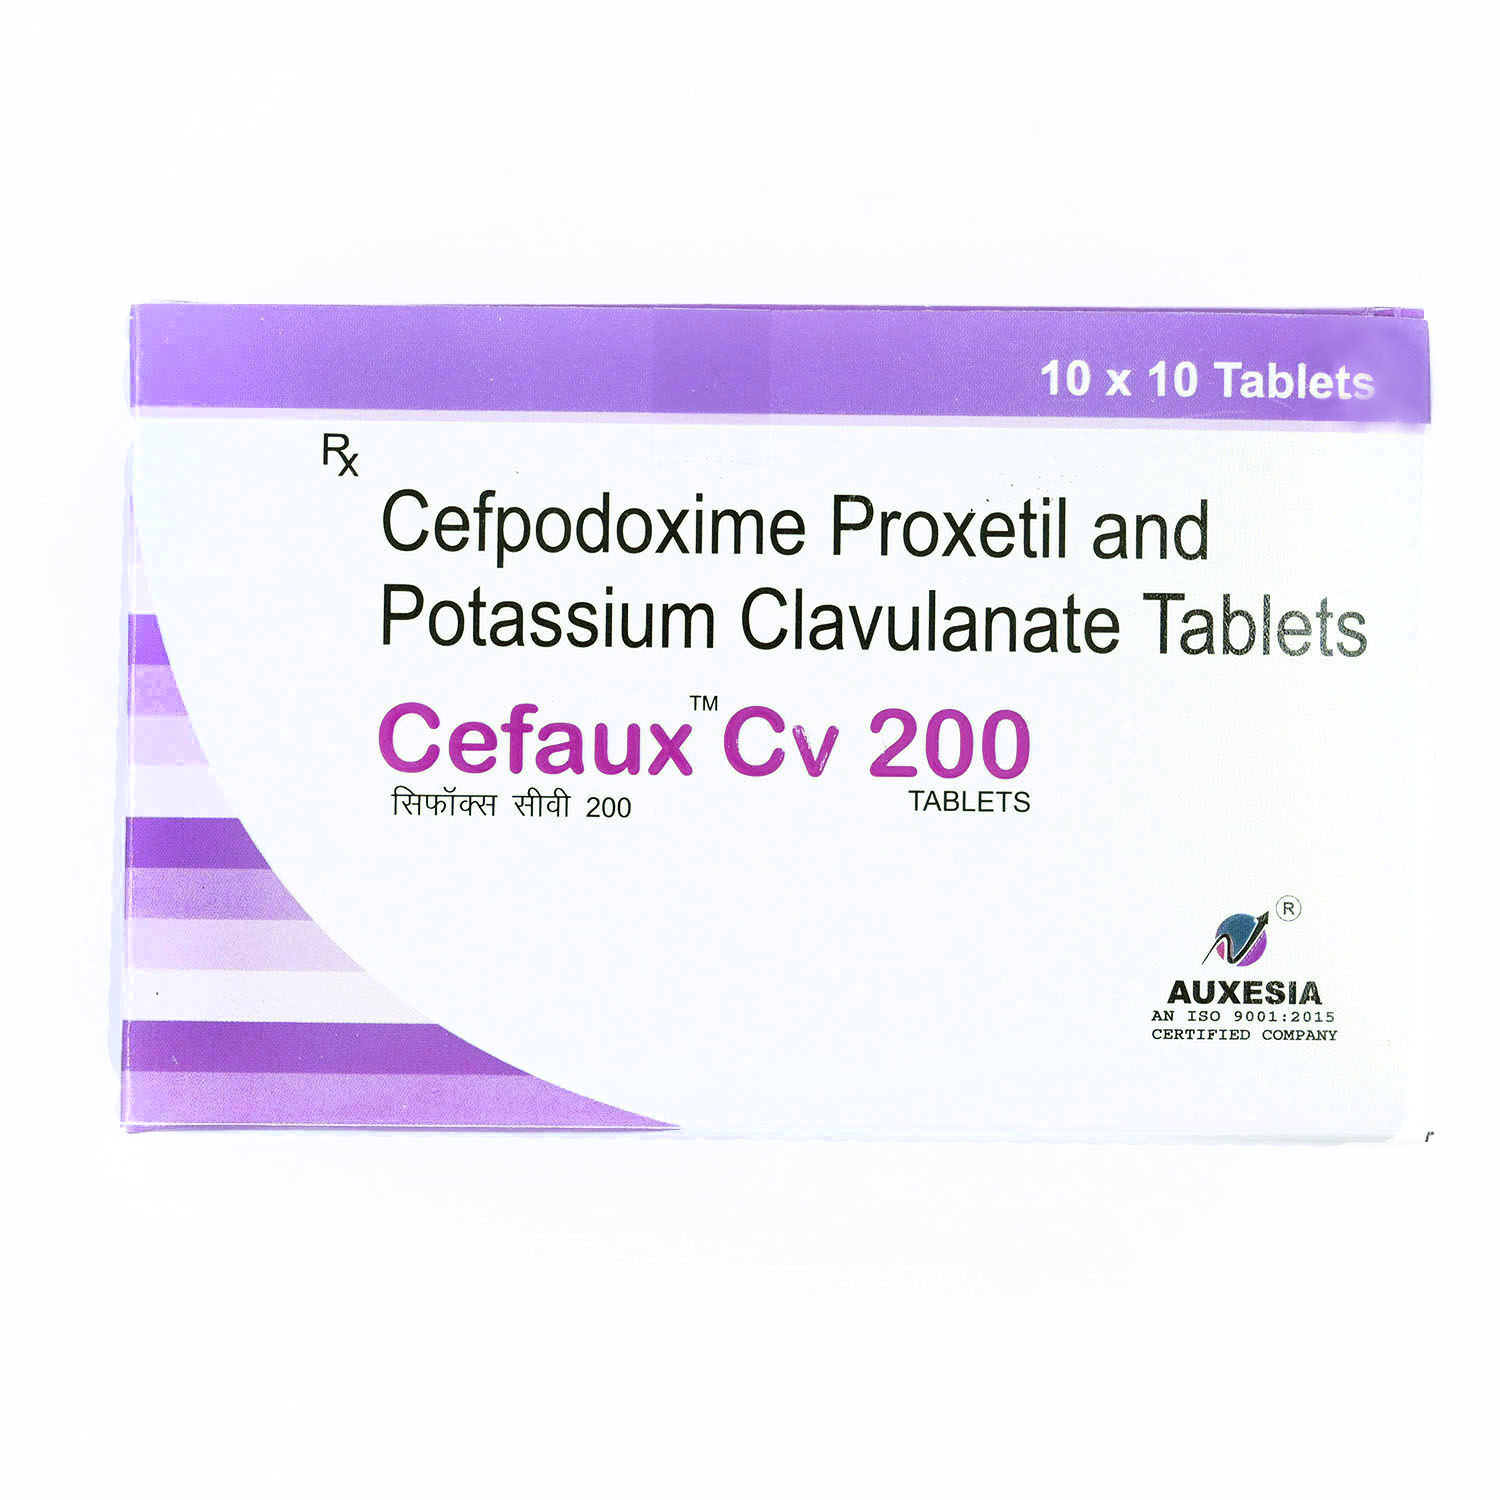 Cefaux Cv 200